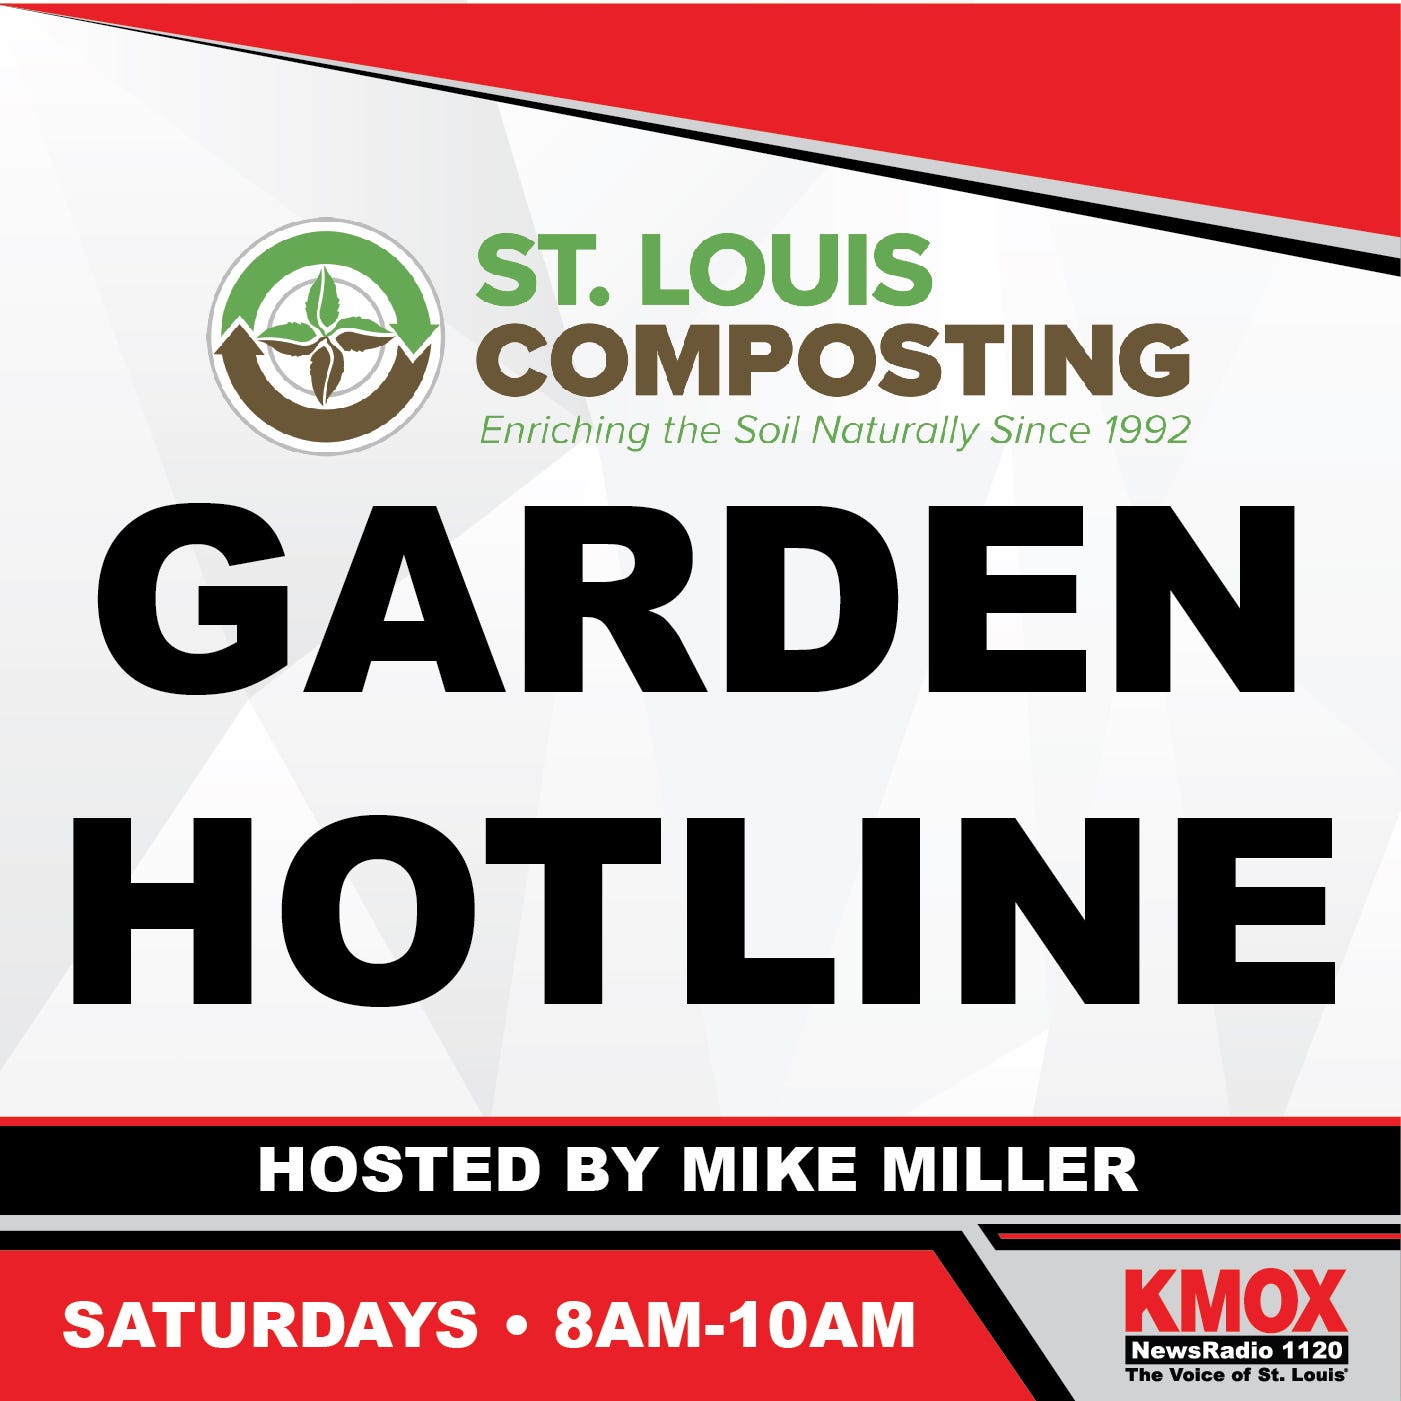 The Garden Hotline Show with Pest Control Doctor Steve Millet